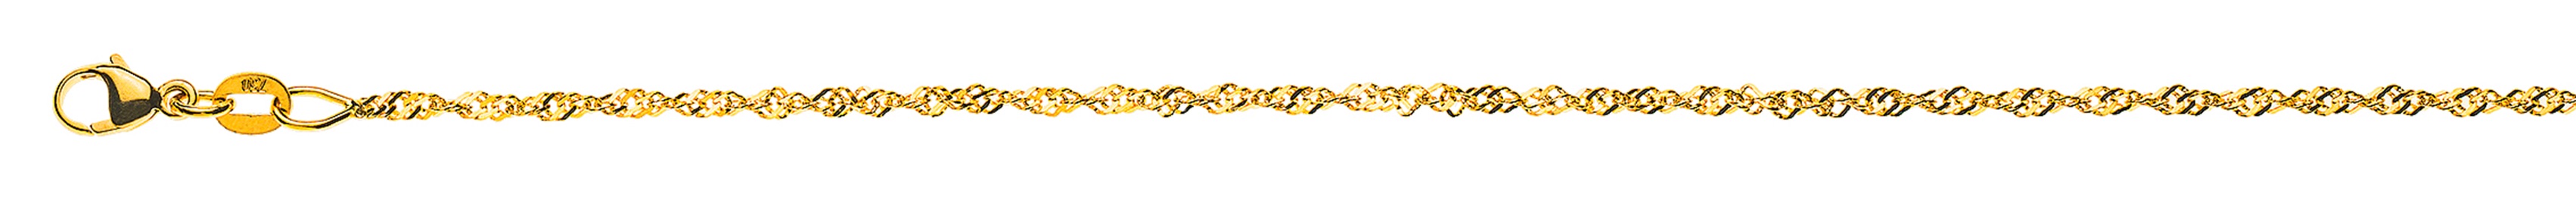 AURONOS Style Necklace Yellow Gold 9K Singapore Chain 38cm 1.5mm